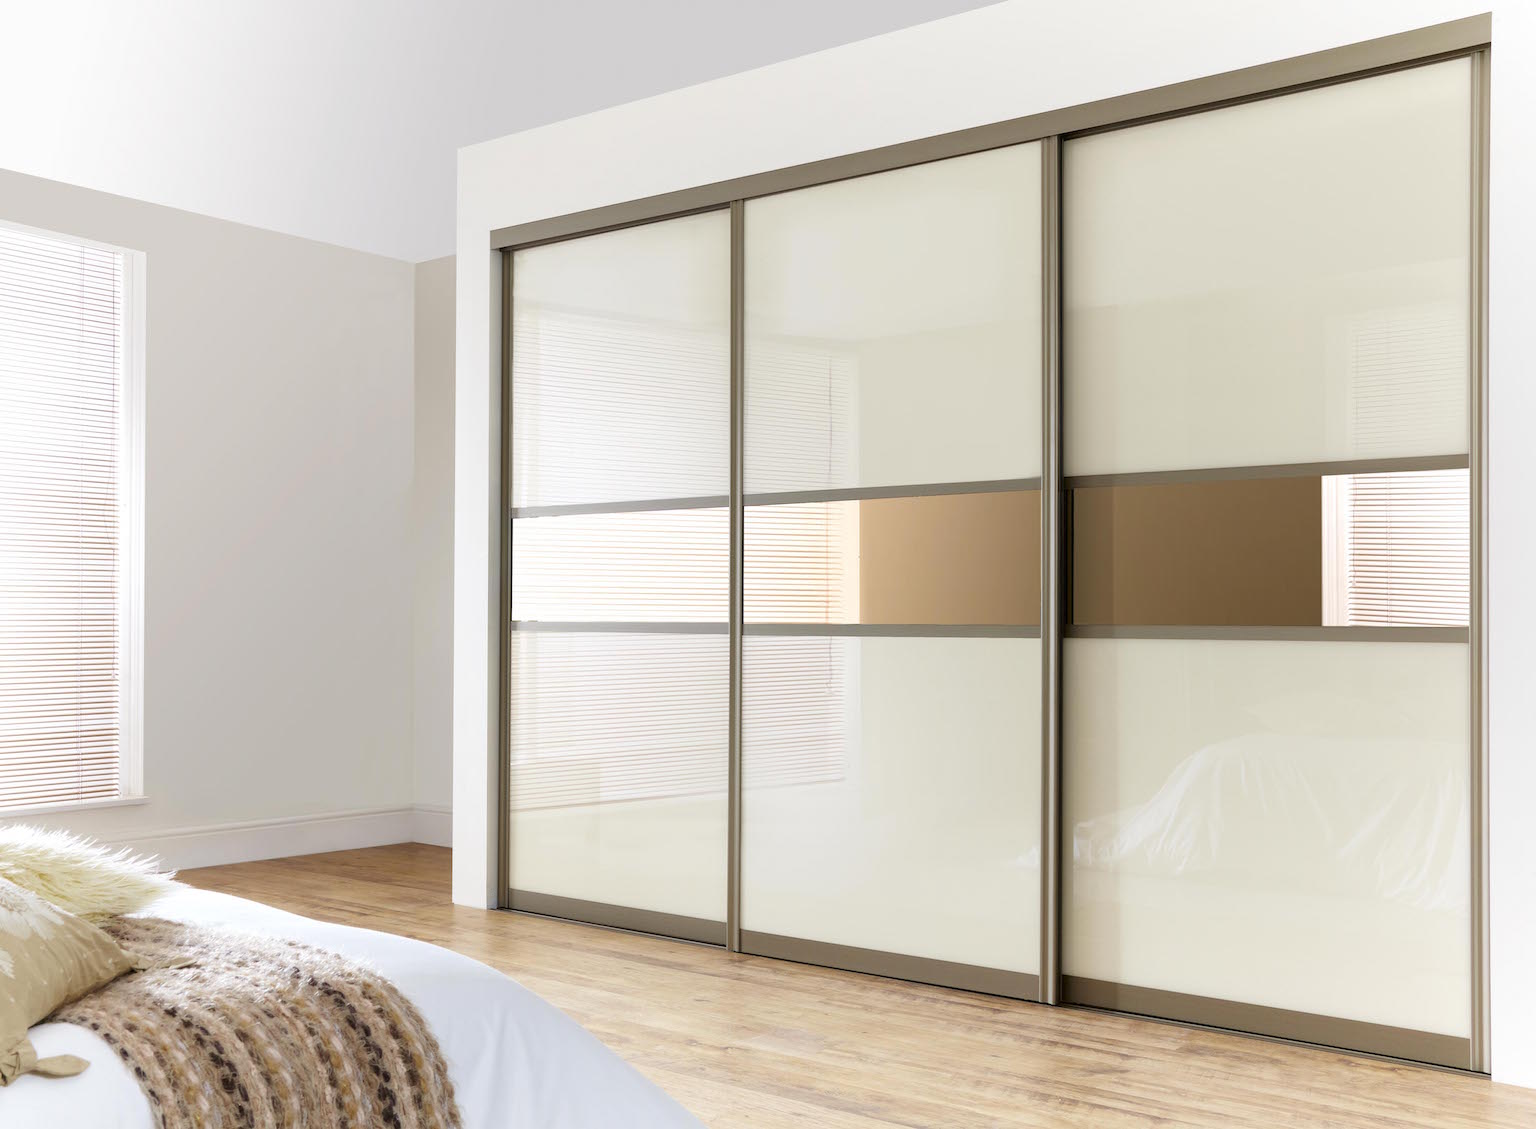 furniture-ideas-breathtaking-high-gloss-white-color-built-in-wardrobe-as-inspiring-closet-cabinet-modern-master-bedroom-furnishing-ideas-precious-built-in-wardrobe